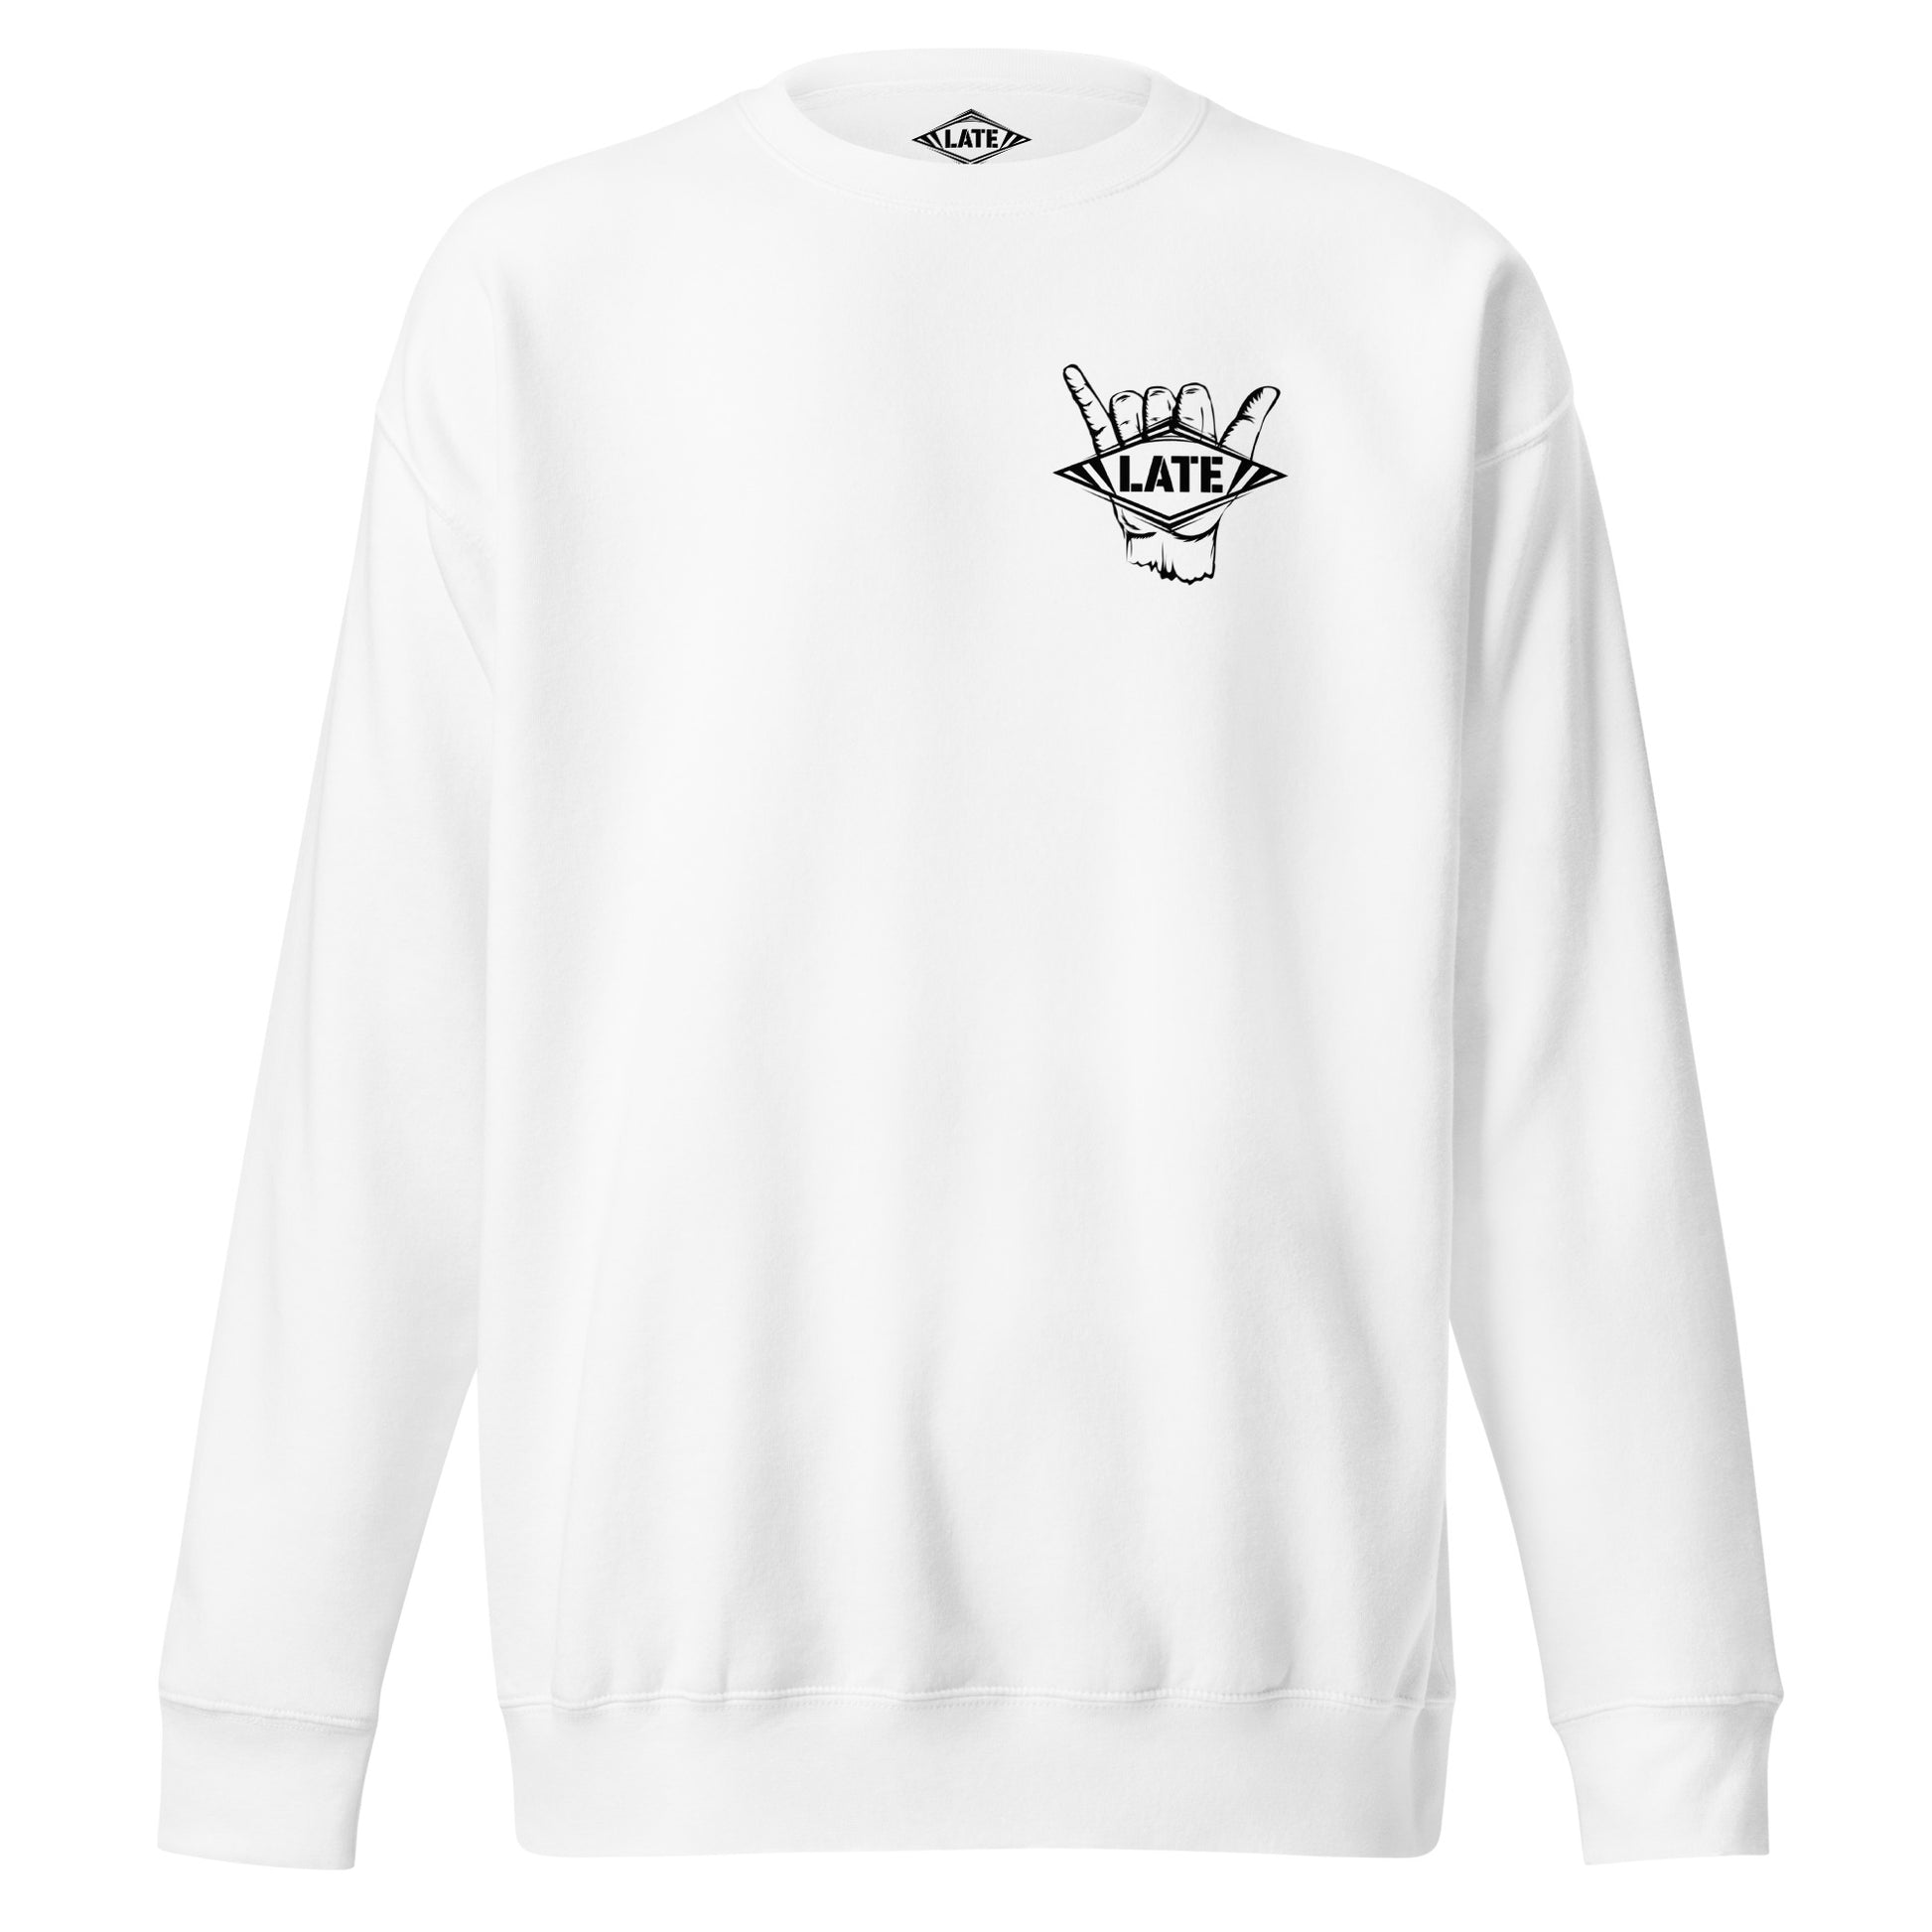 Sweatshirt Never Too Late shaka hand surfeur, avec le logo Late surfoard, sweat unisex de face couleur blanc